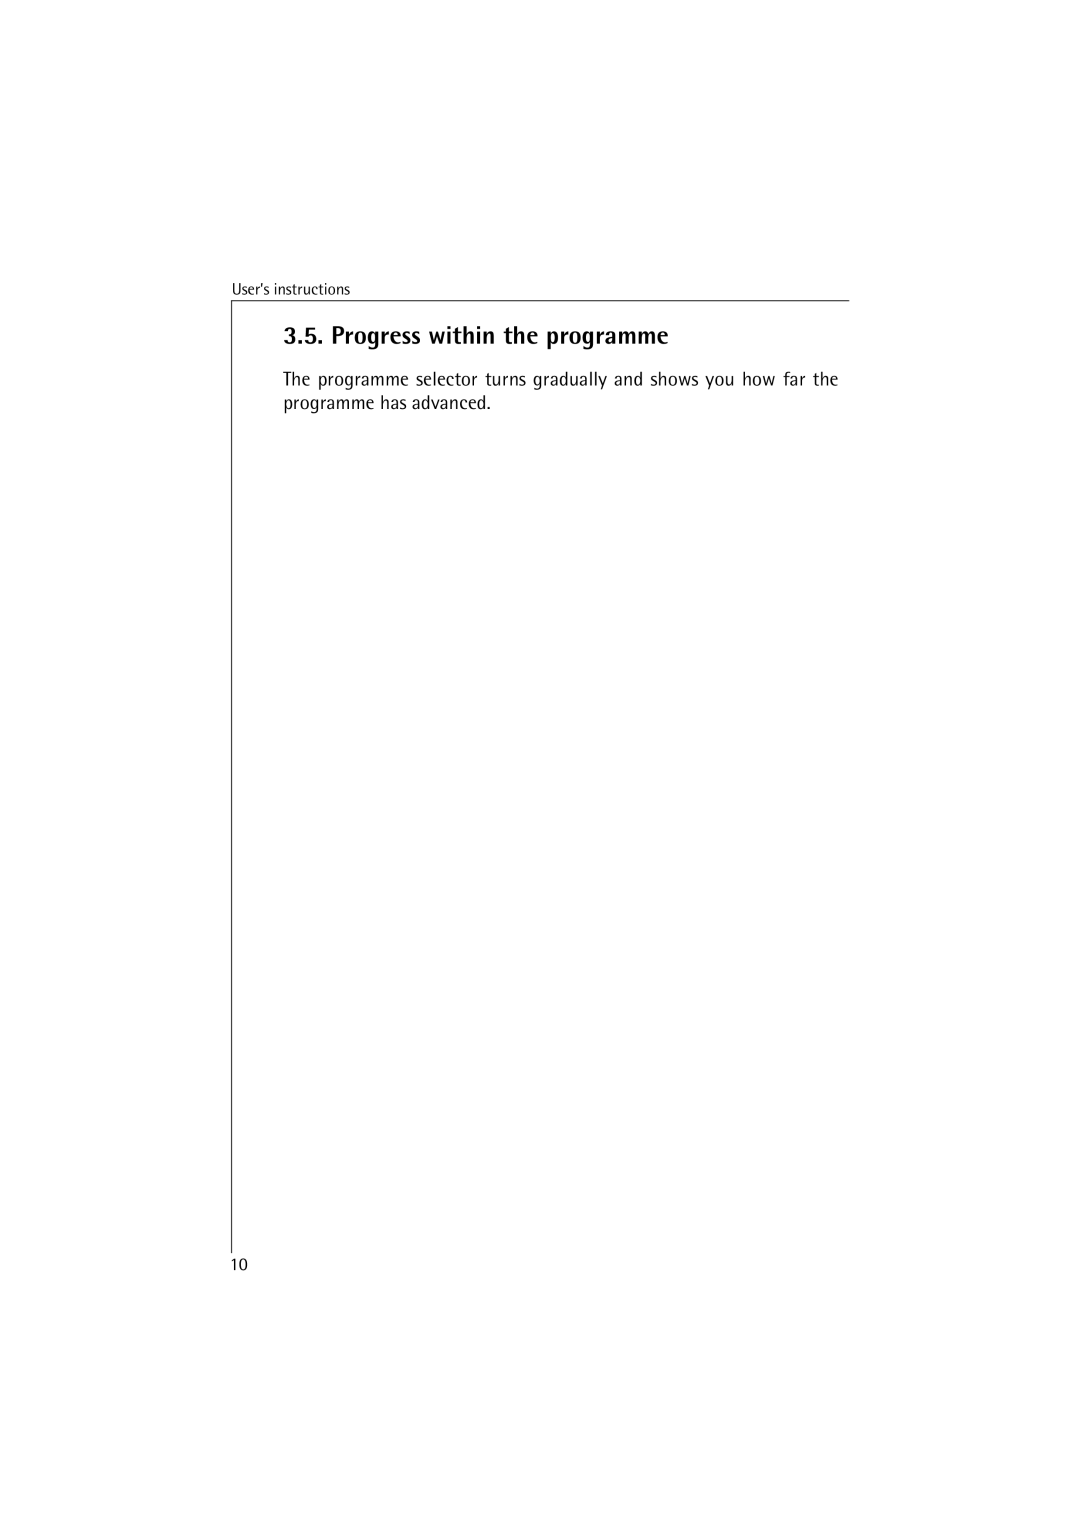 AEG 40850 manual Progress within the programme 